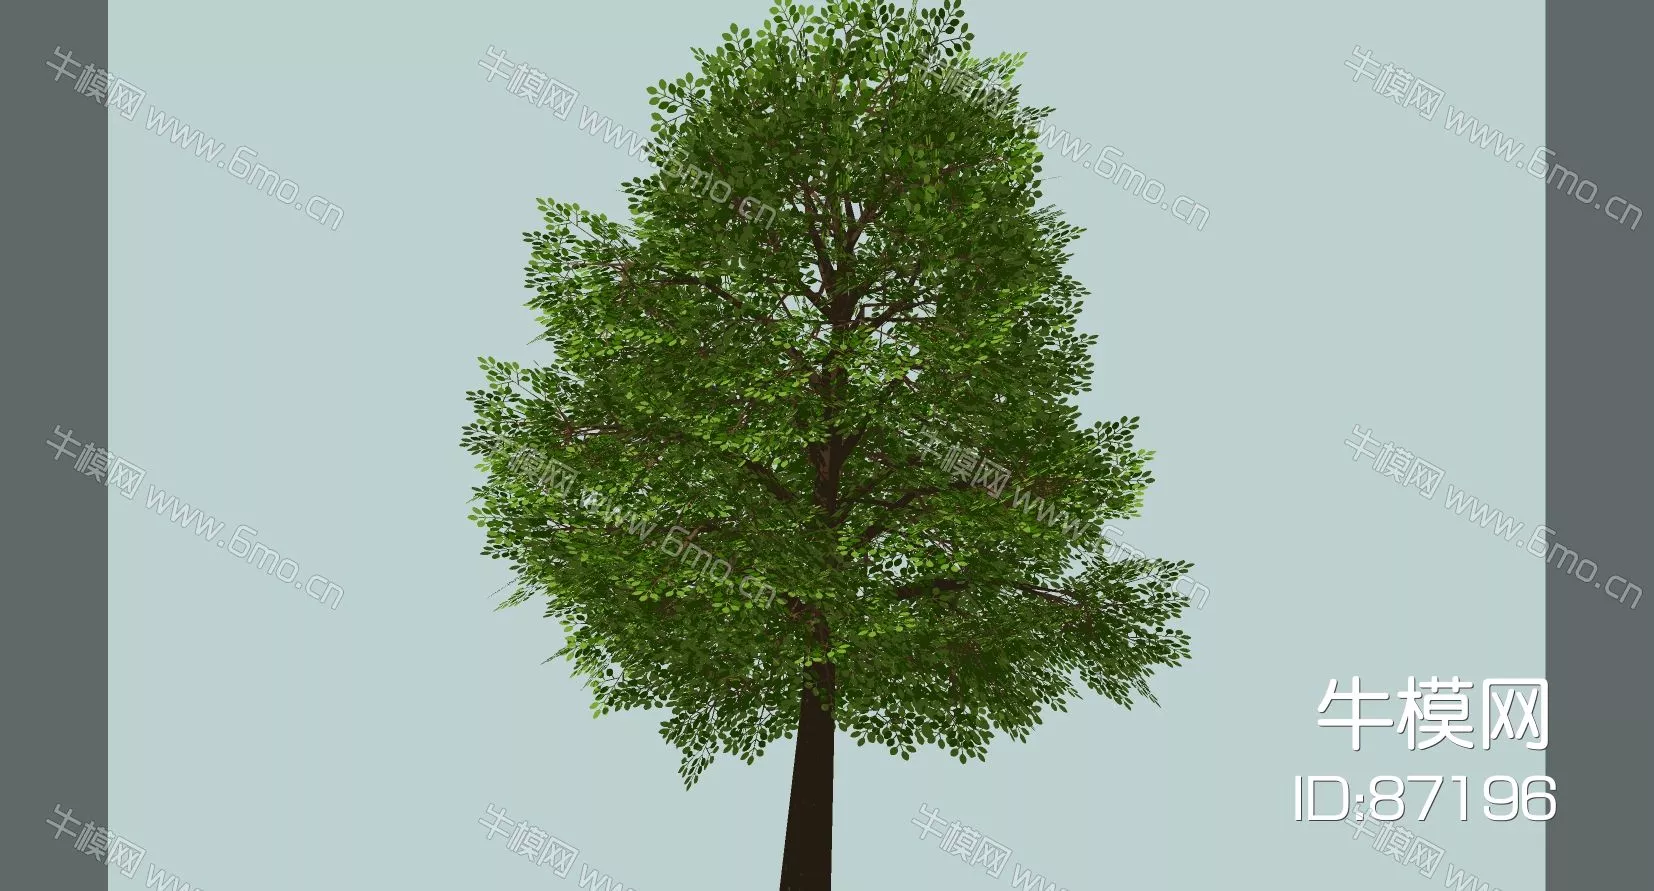 OUTDOOR TREE - SKETCHUP 3D MODEL - ENSCAPE - 87196